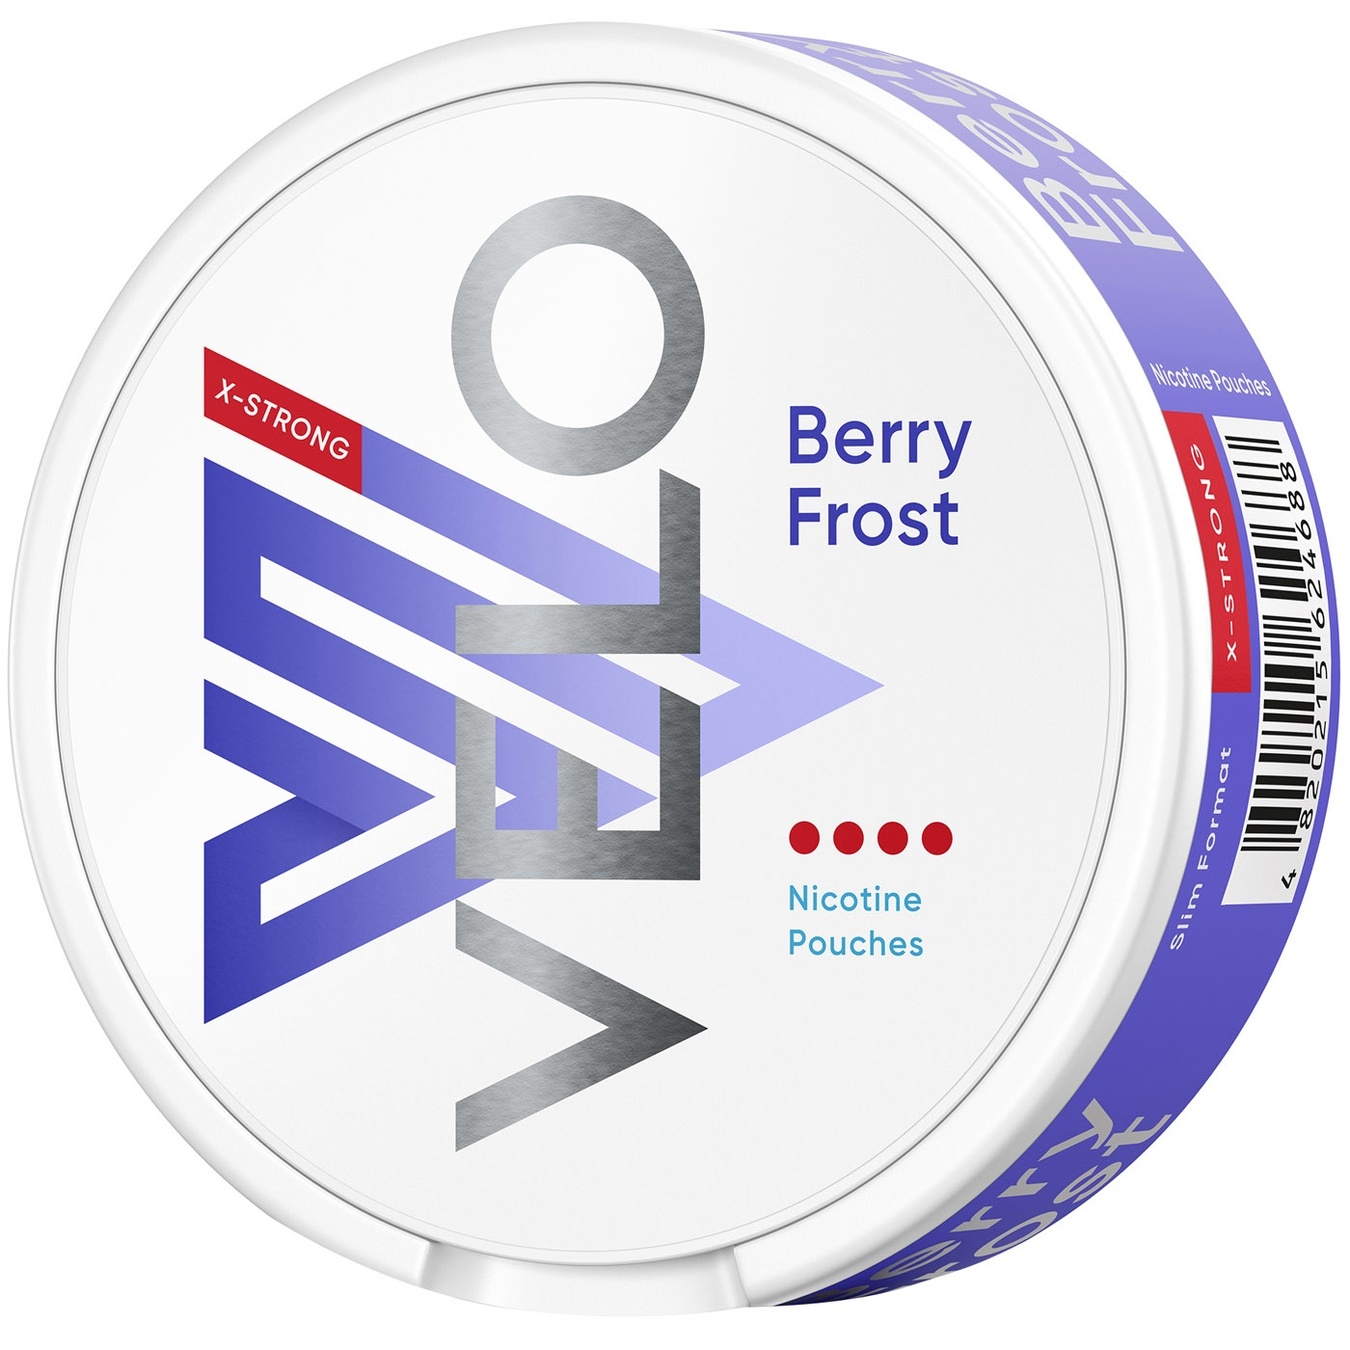 Подушечки Velo Berry Frost X-Strong никотиновые (цена указана без акциза)